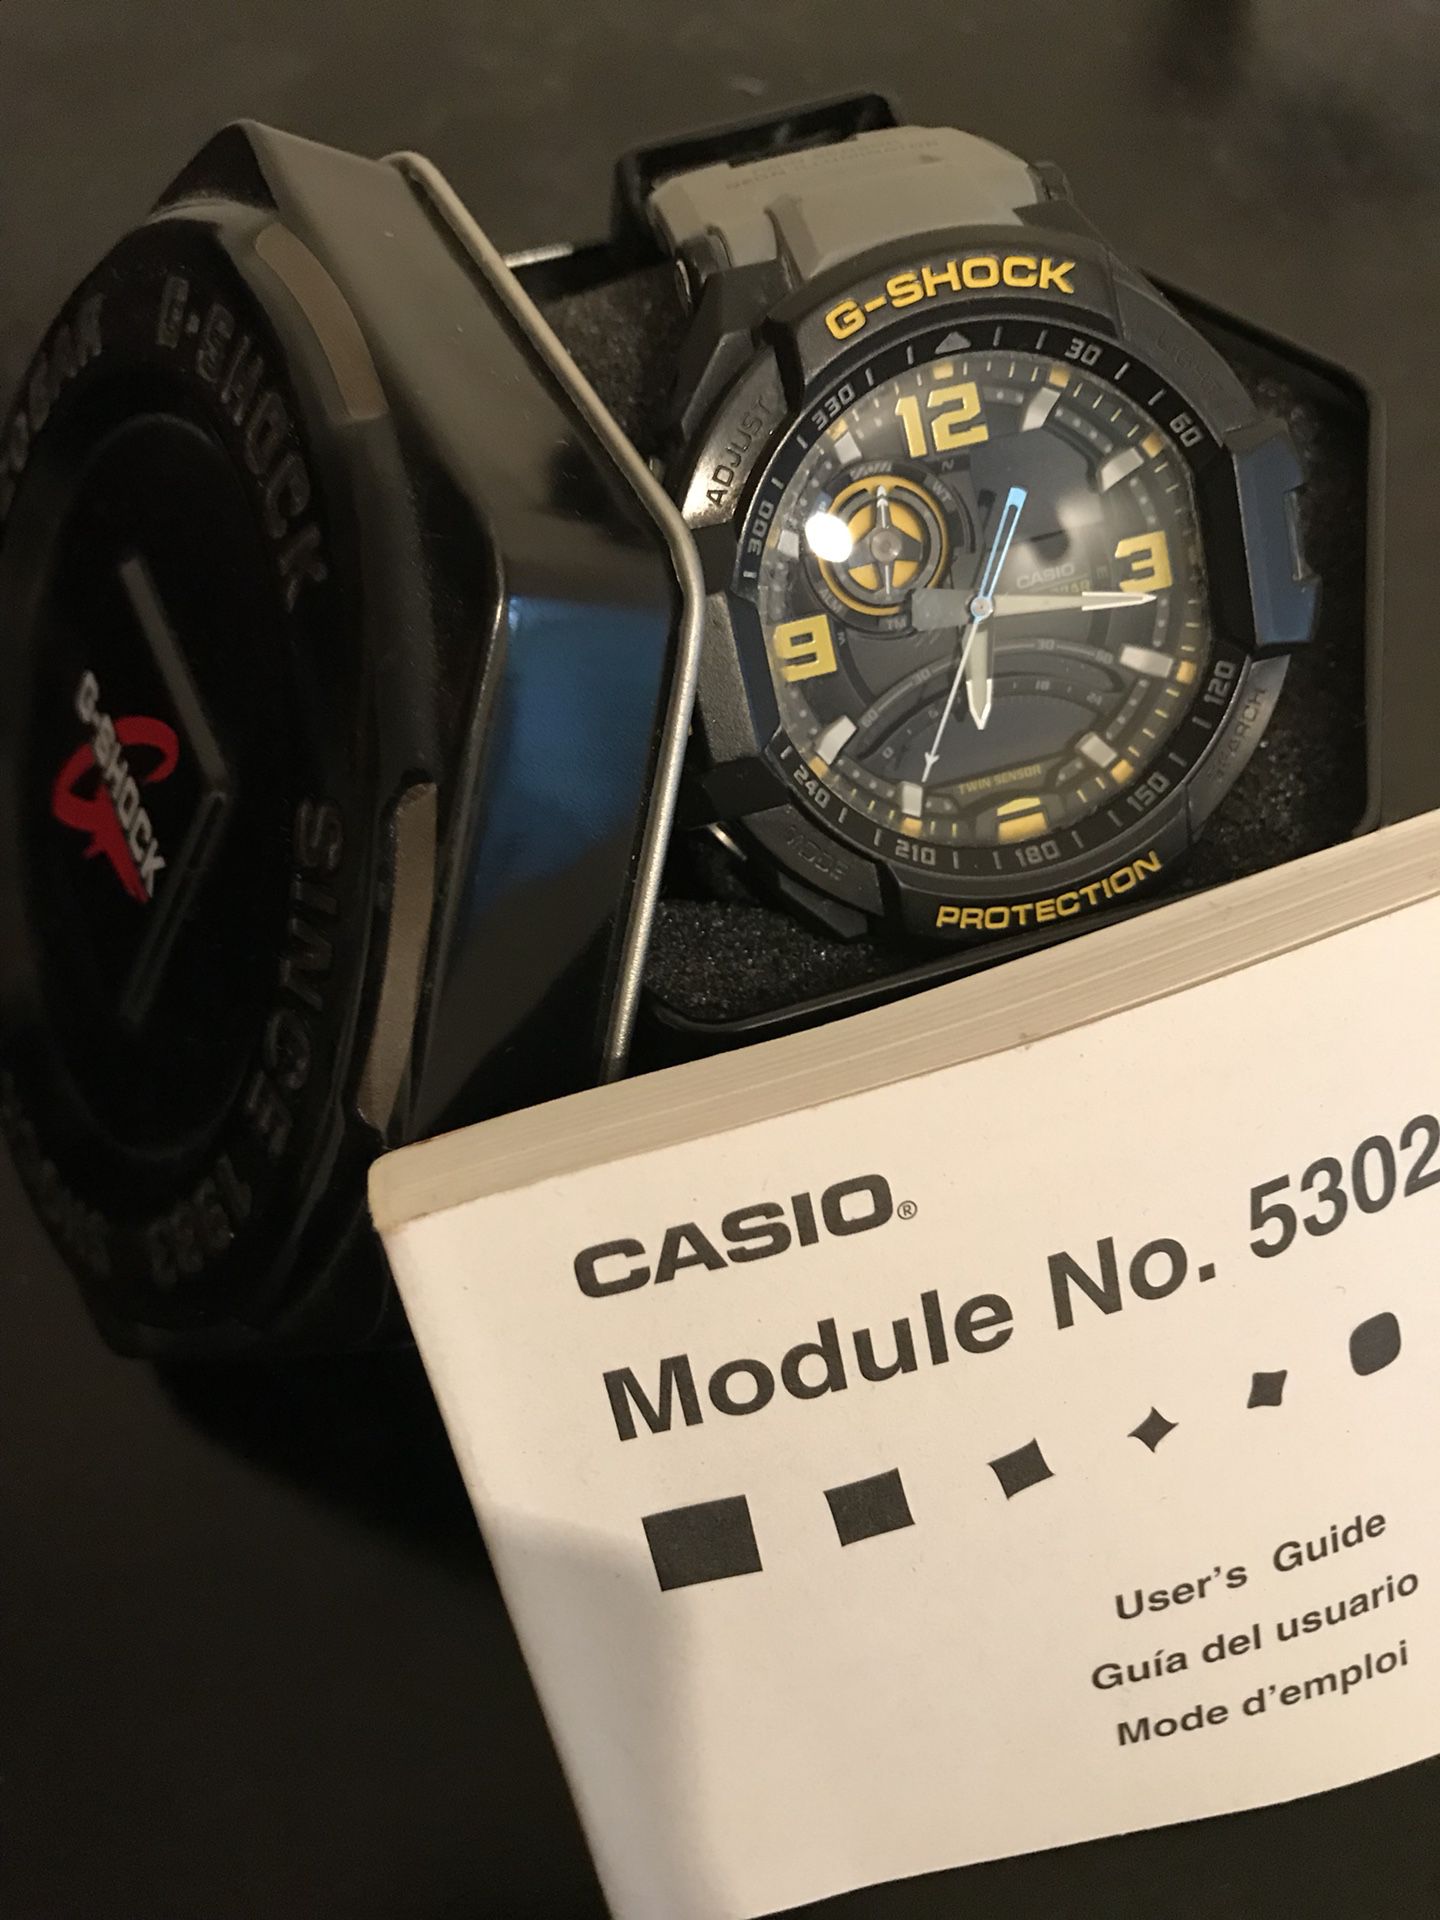 Casio G-Shock 5302 for Sale in Chicago, IL - OfferUp